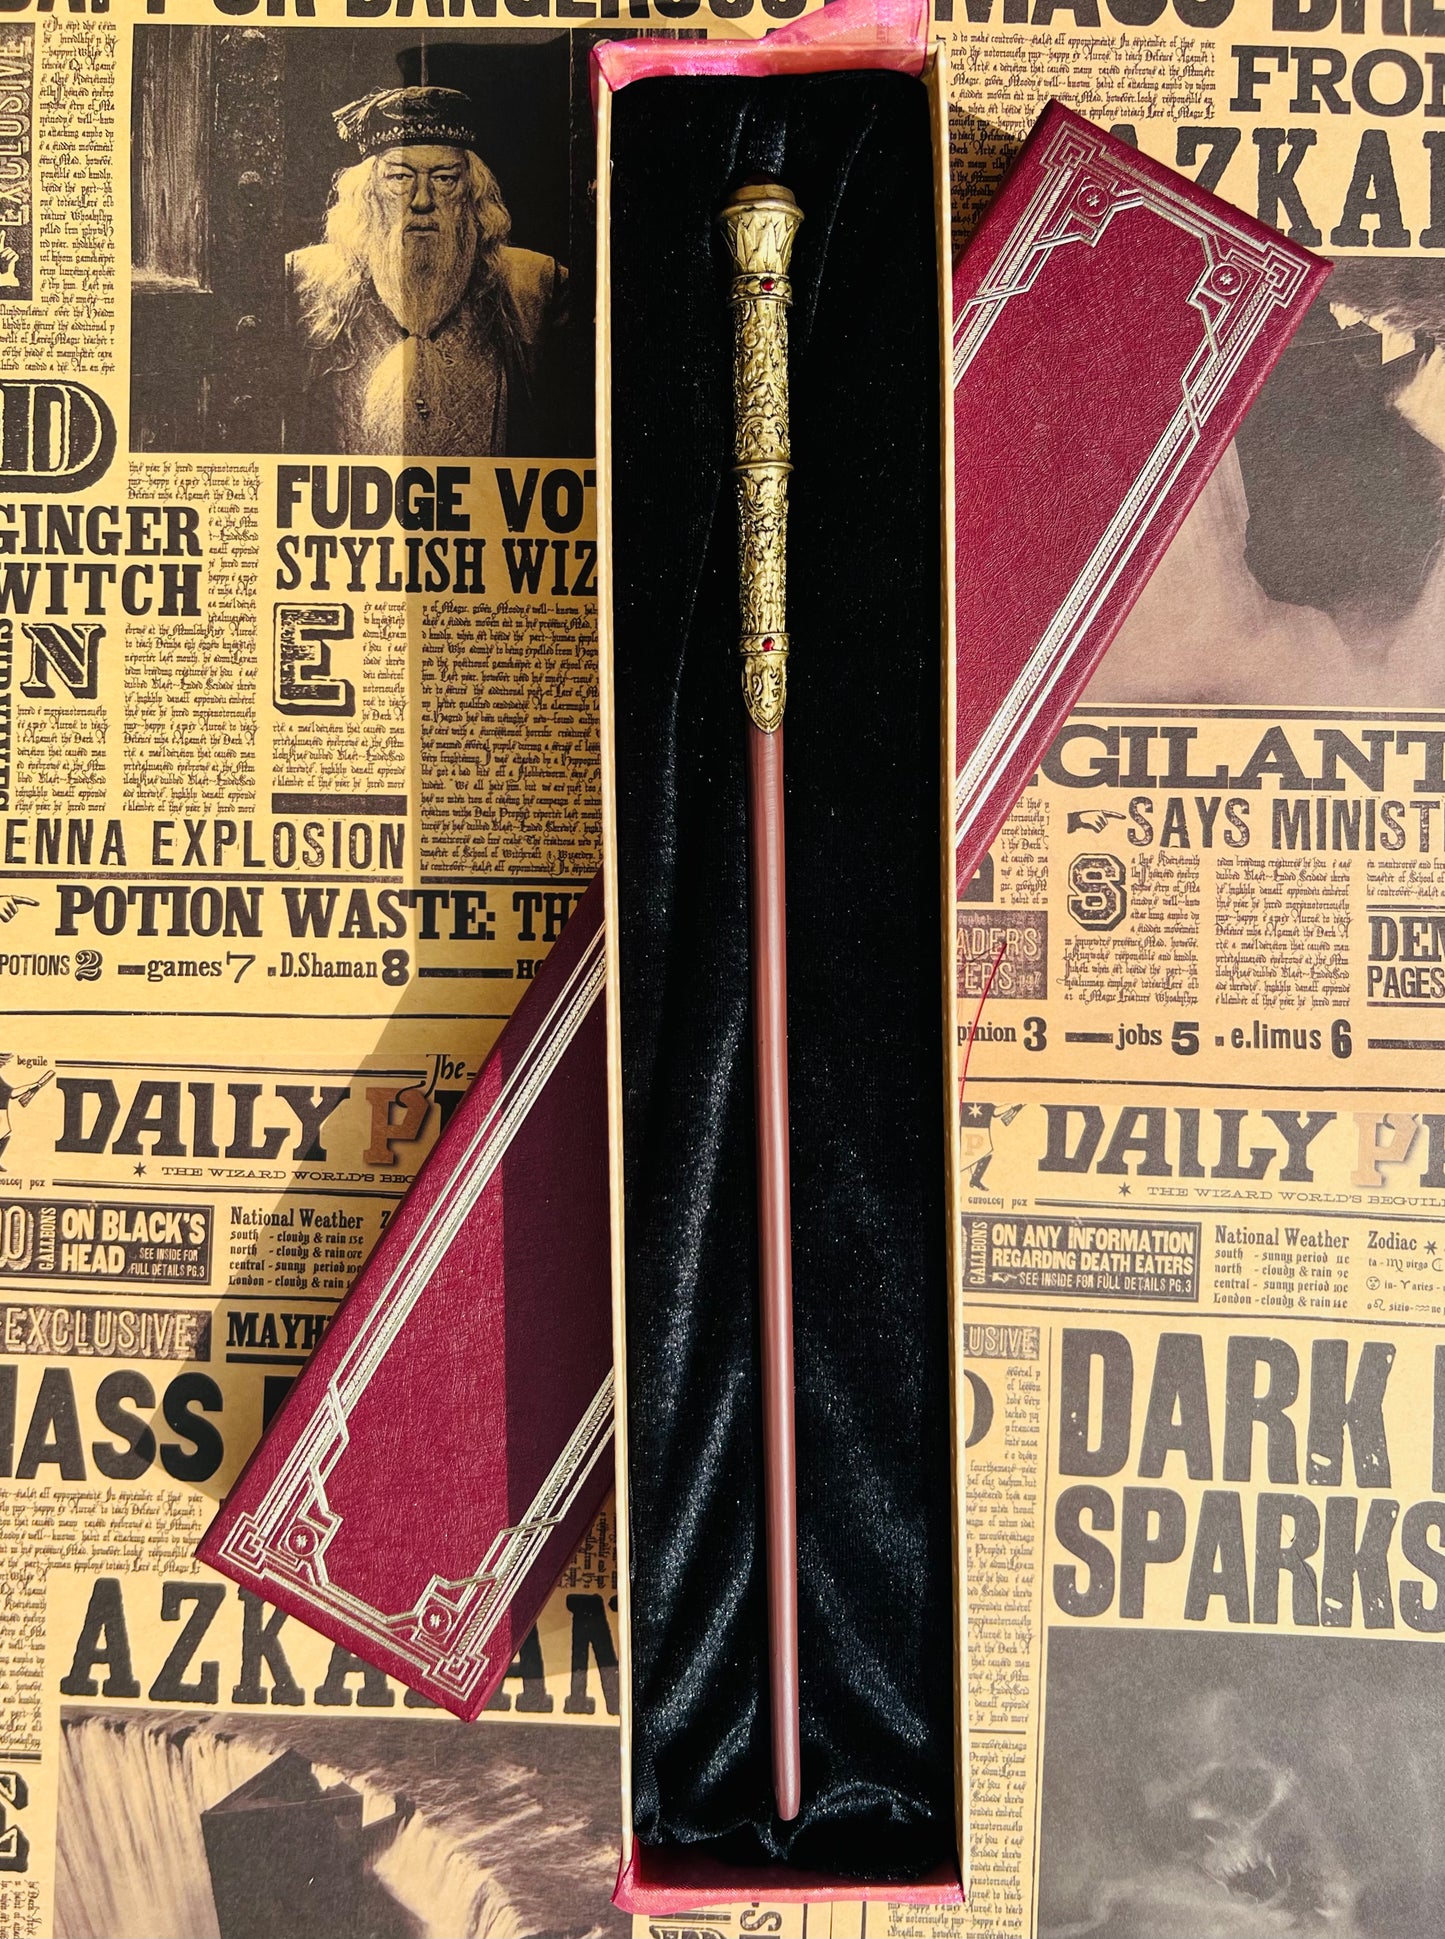 Gryffindor Sword Magic Wand